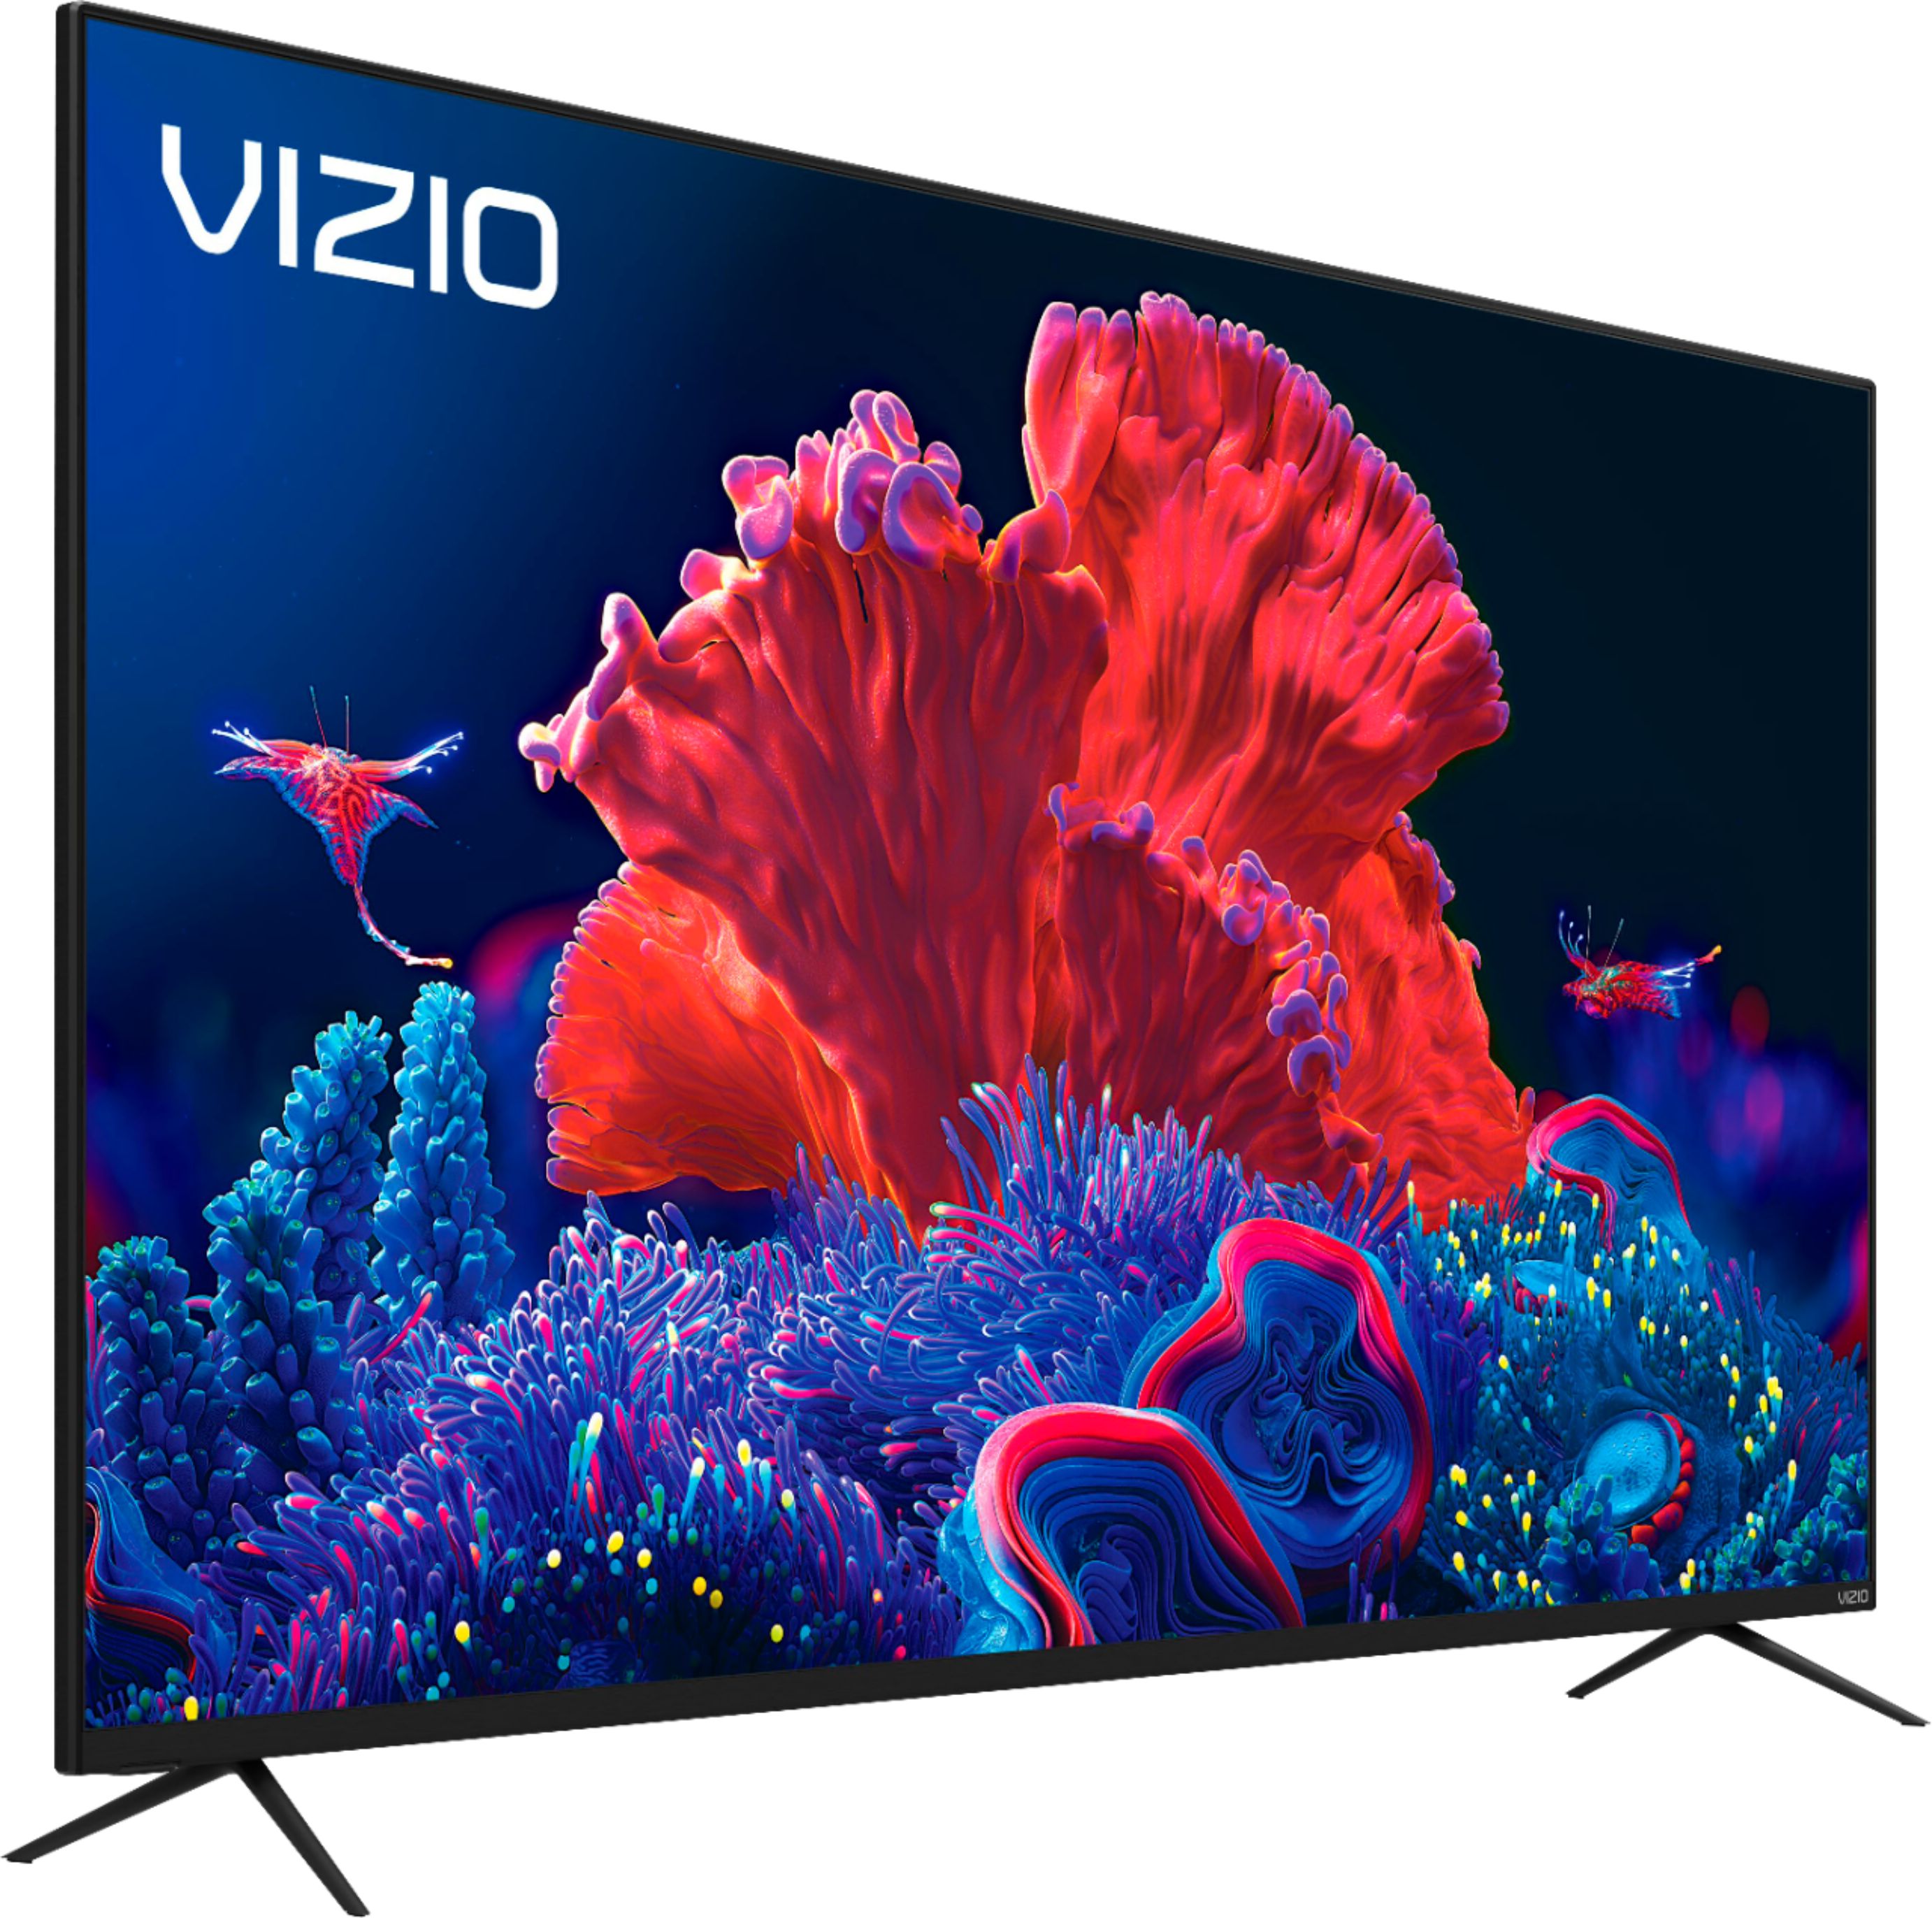 Angle View: VIZIO - 65" Class M-Series Quantum Series LED 4K UHD SmartCast TV